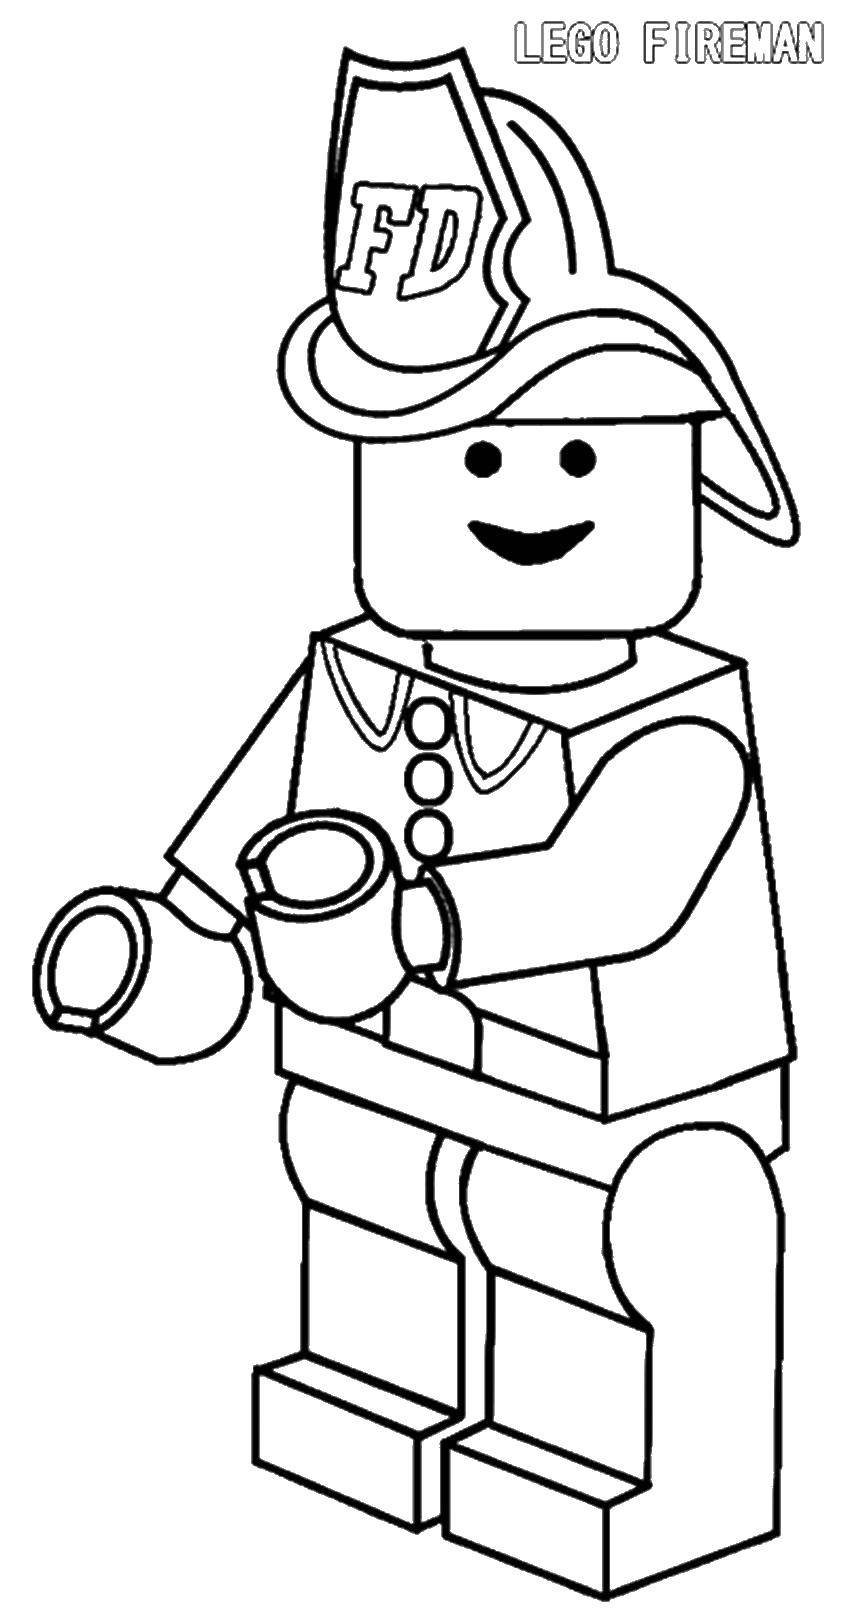 Coloring LEGO fireman. Category LEGO. Tags:  LEGO, fireman, helmet.